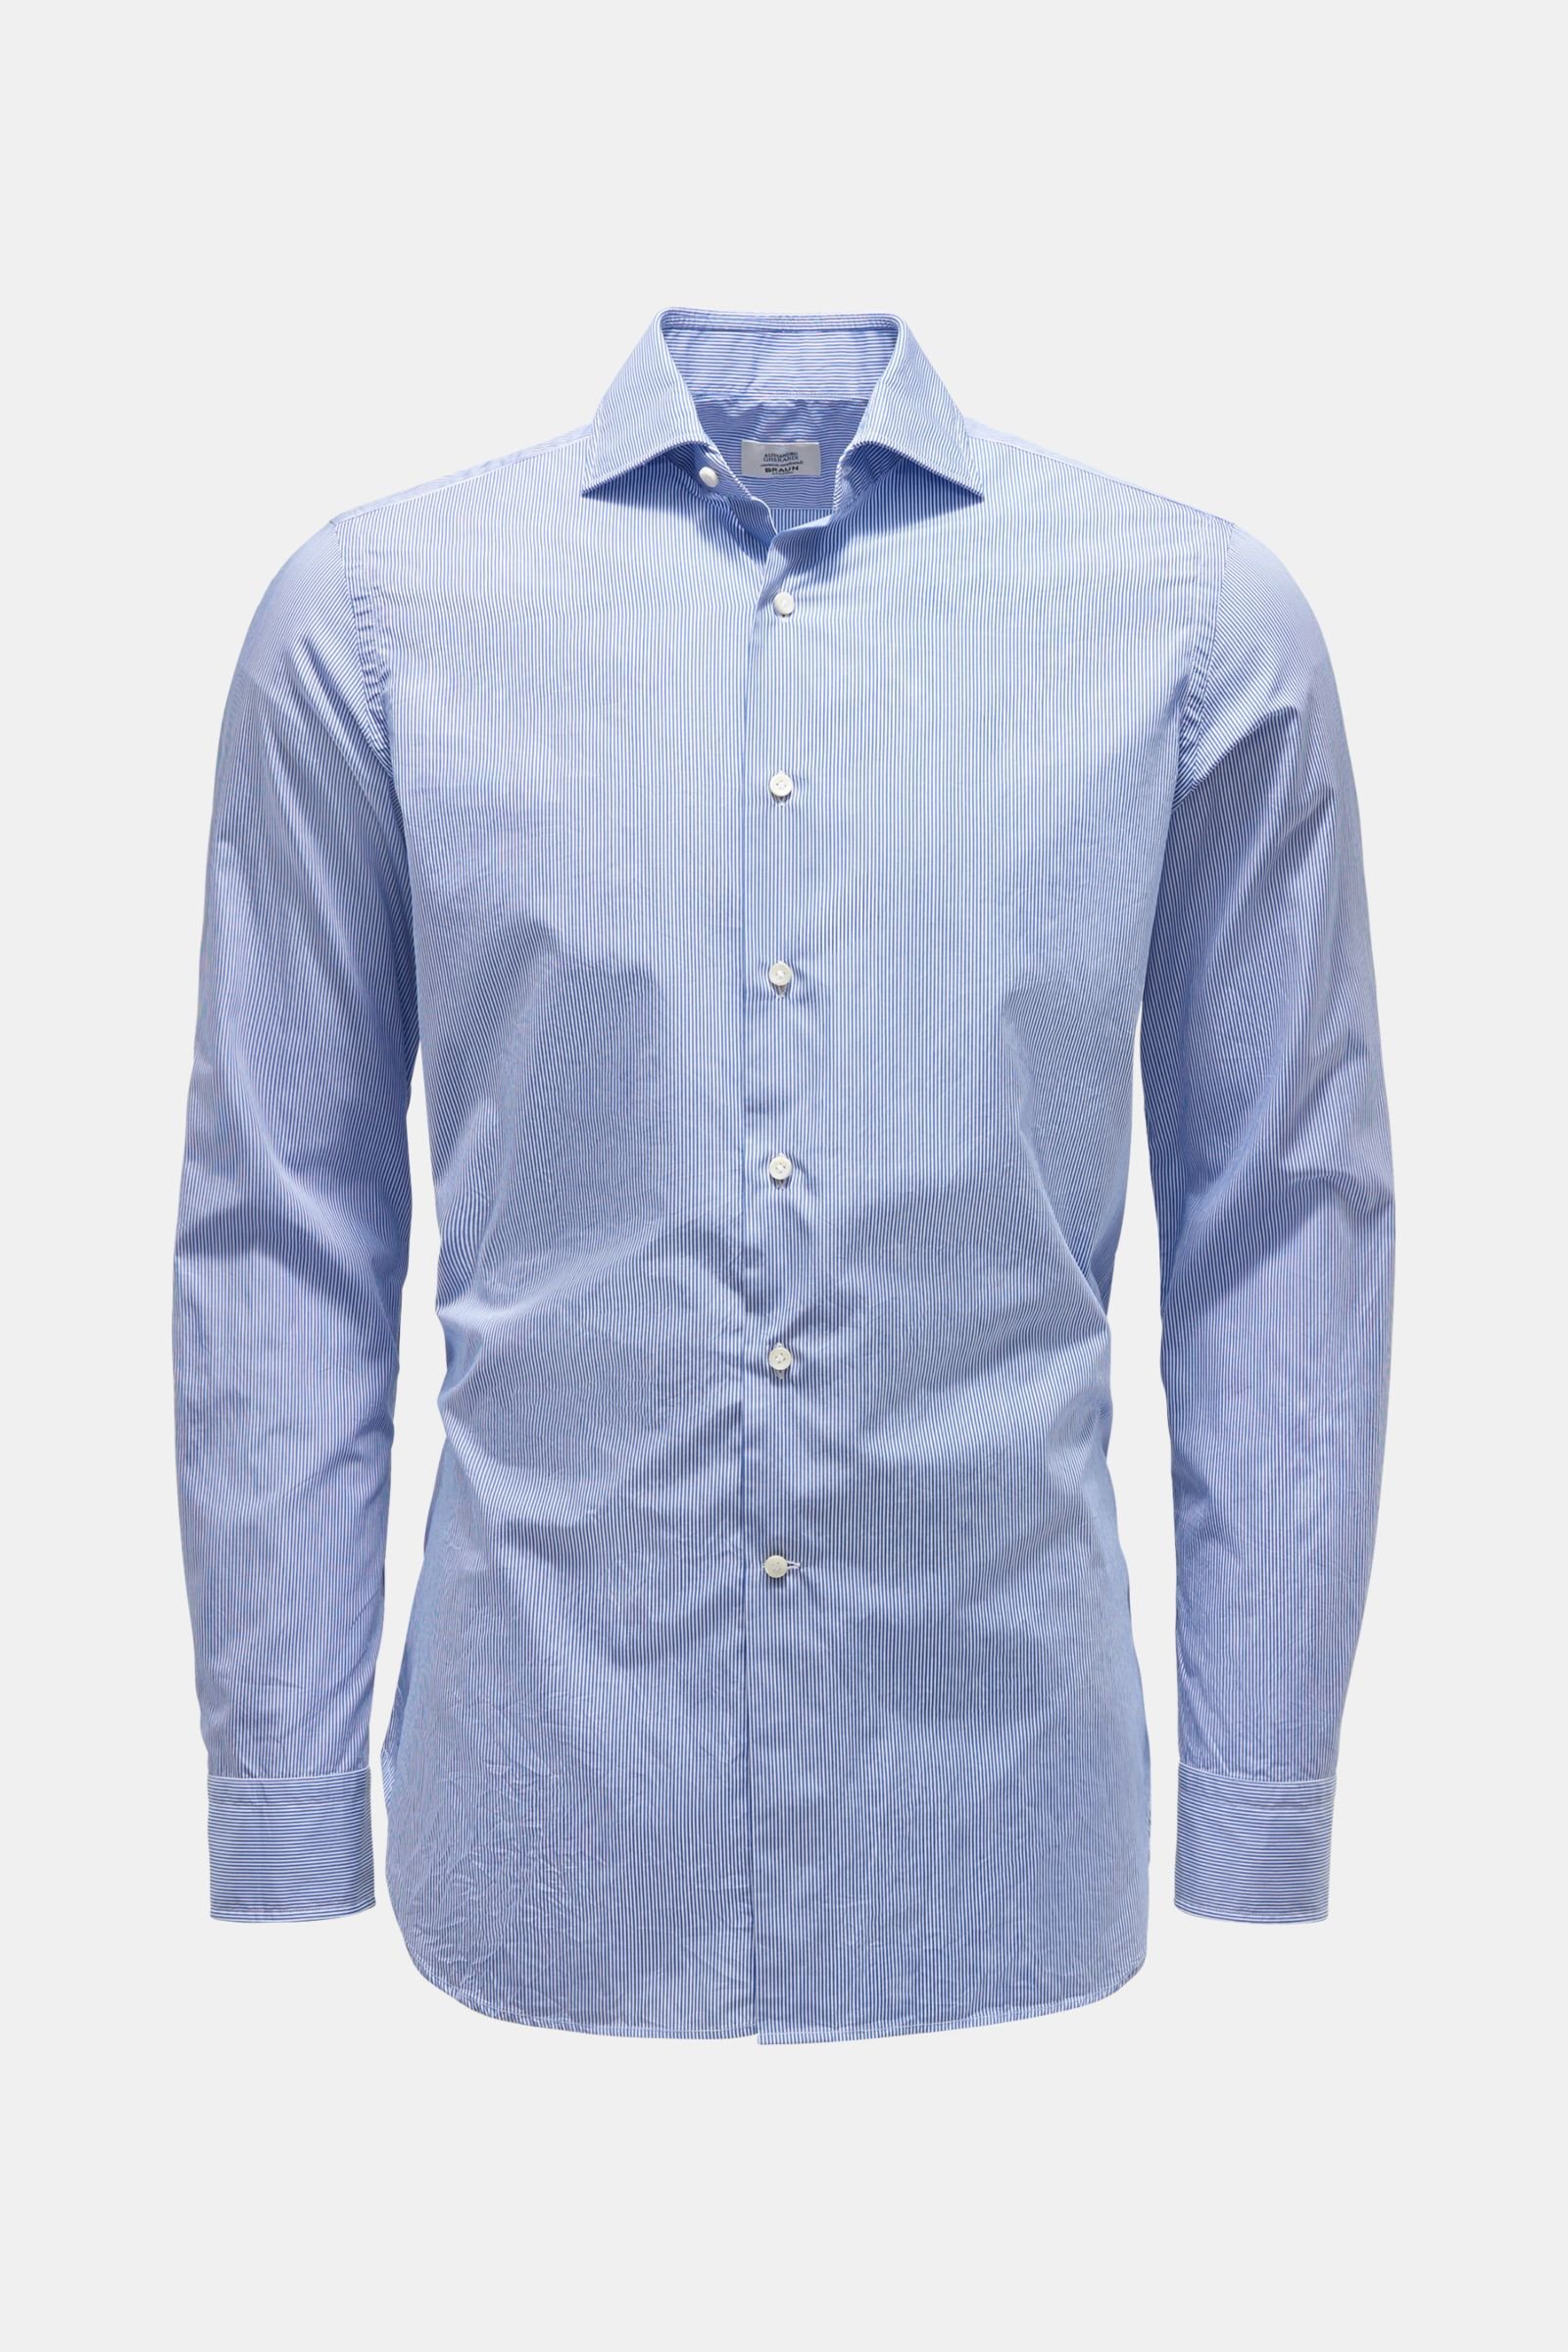 Casual shirt shark collar smoky blue/white striped